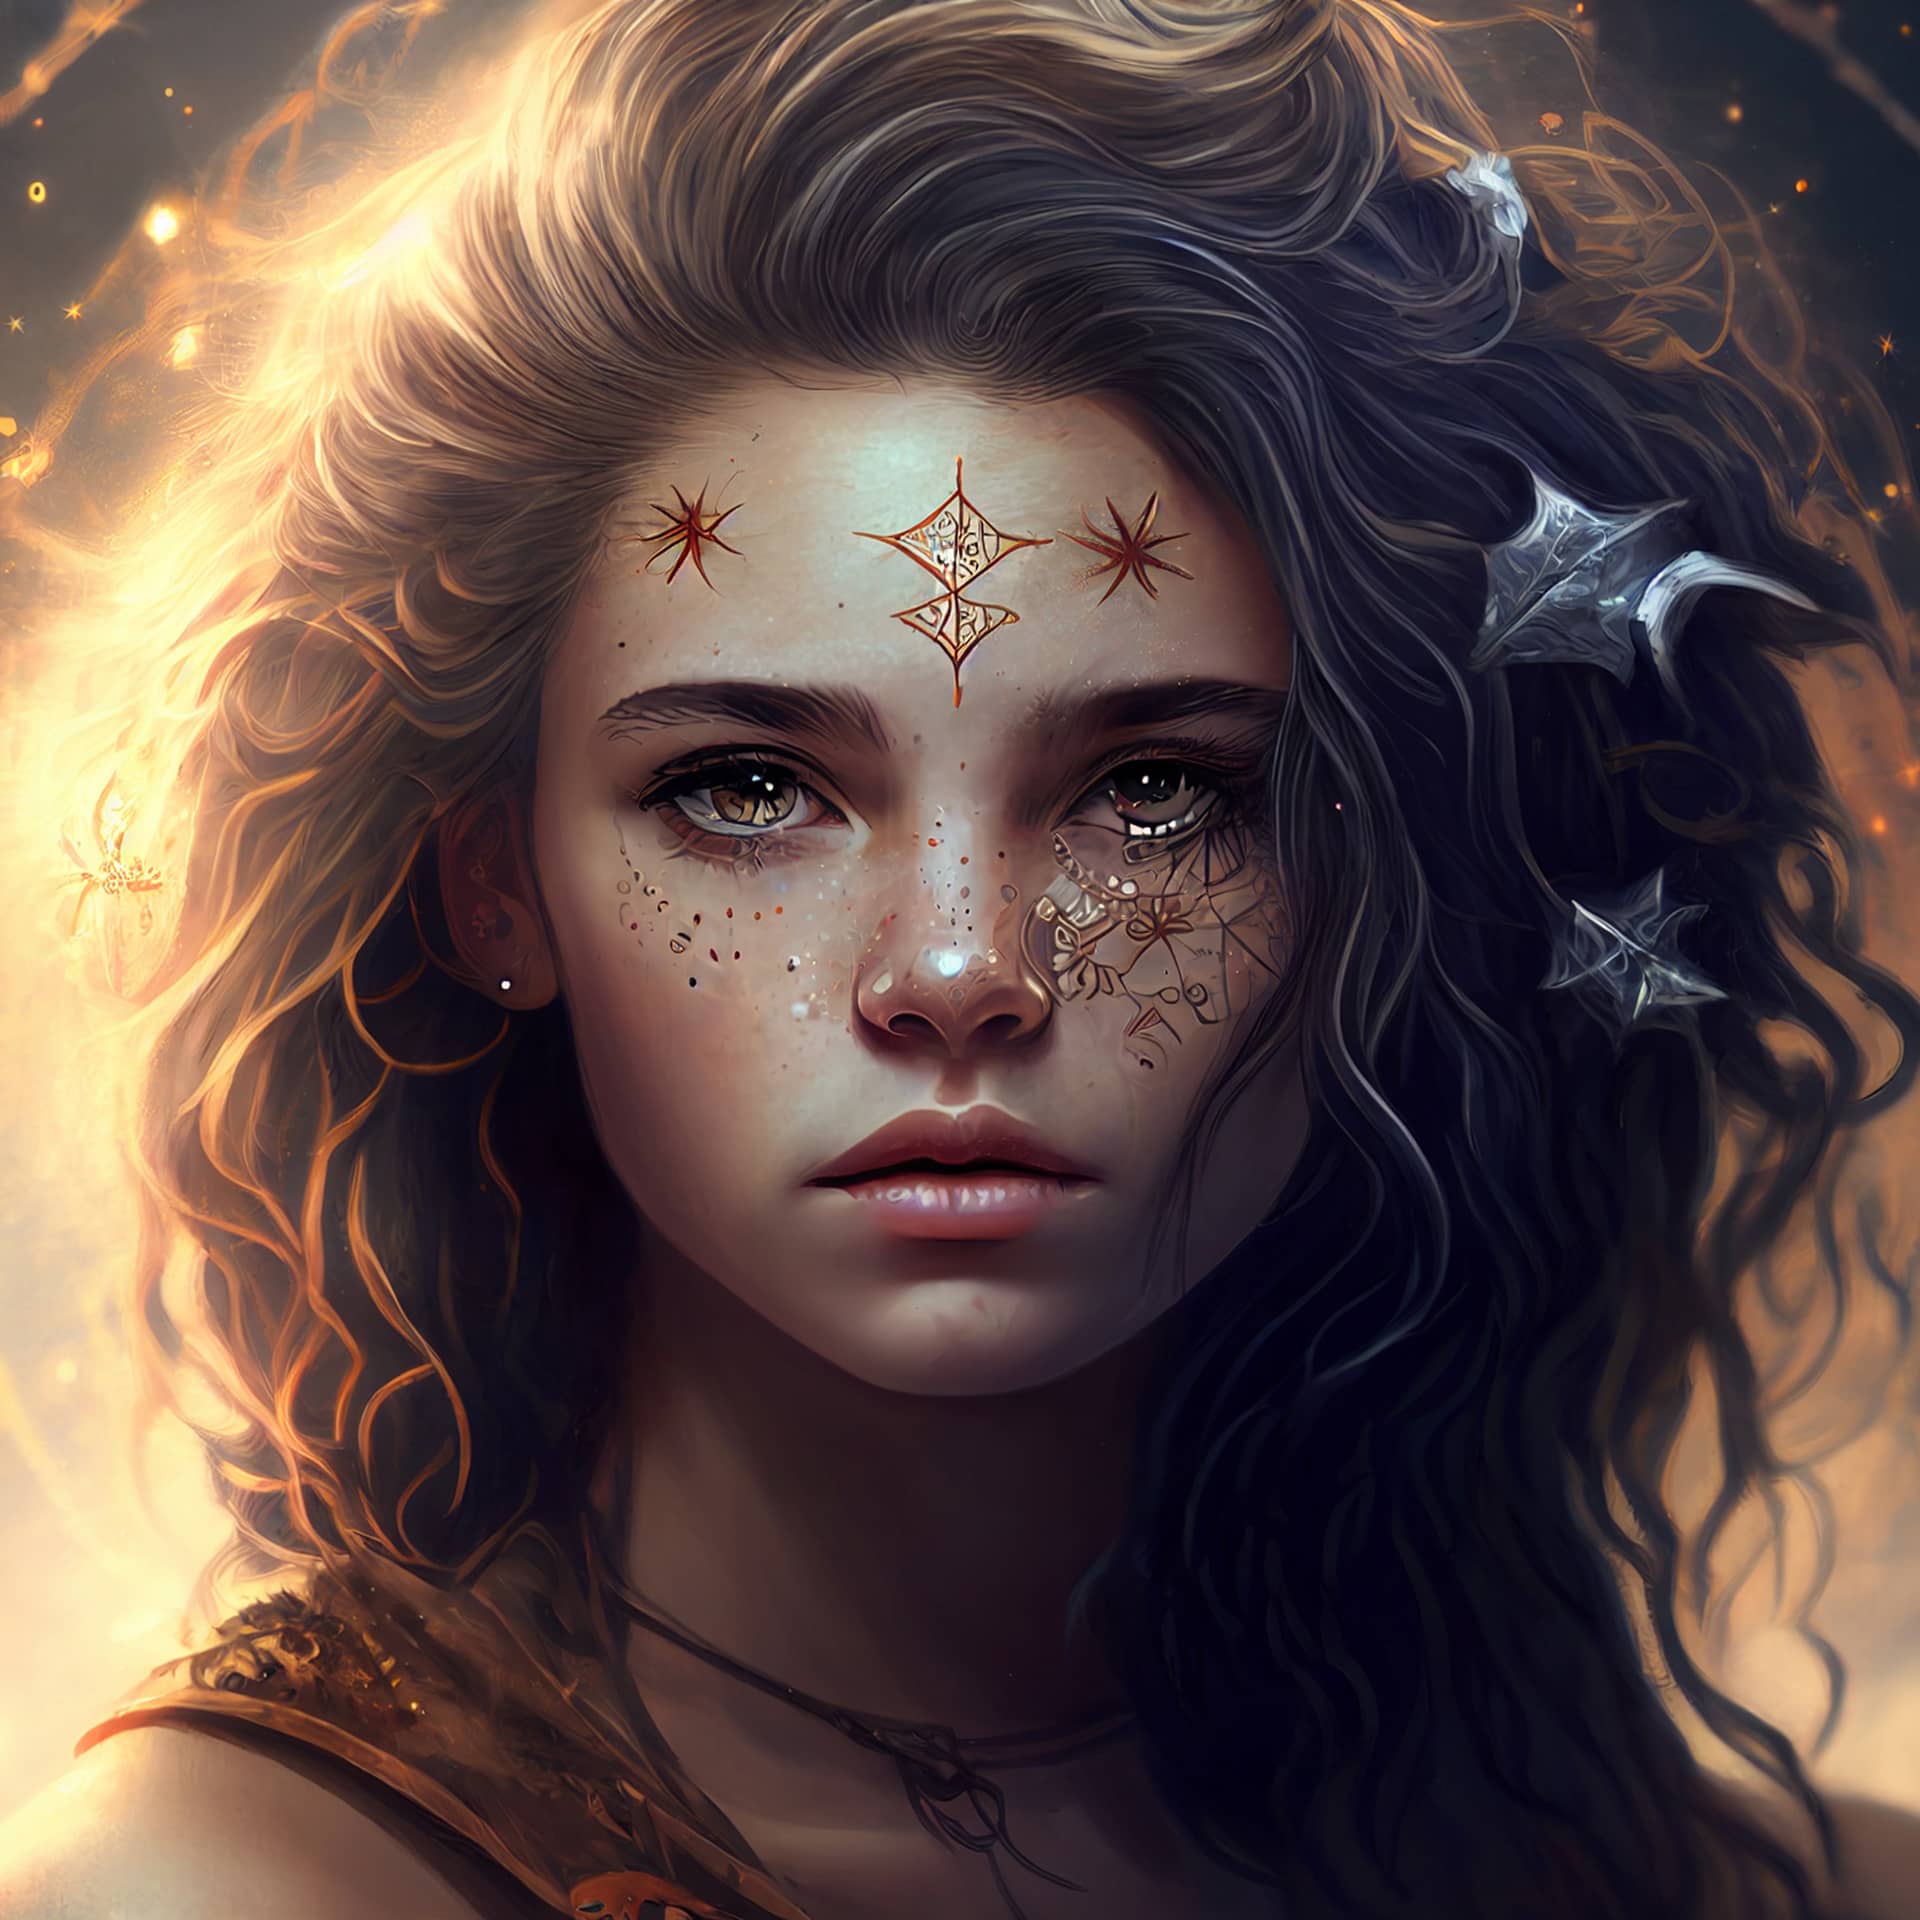 Horoscope symbol magic astrology woman fantastic night sky generative illustration